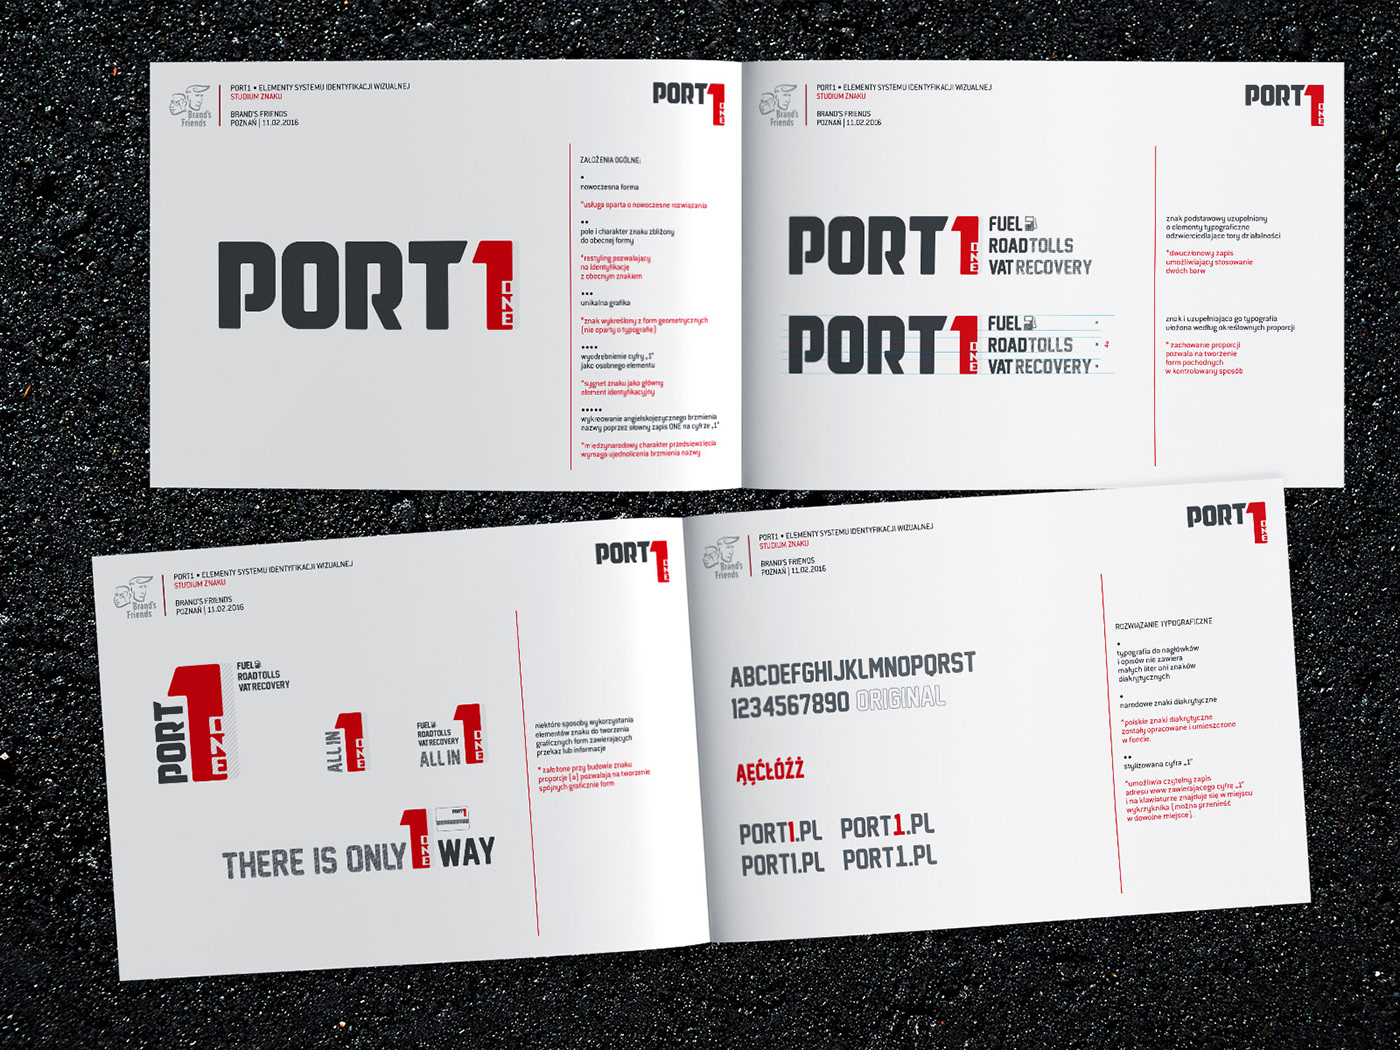 port one portonepolska design visual identification Fuel Cards Transport logistics companies